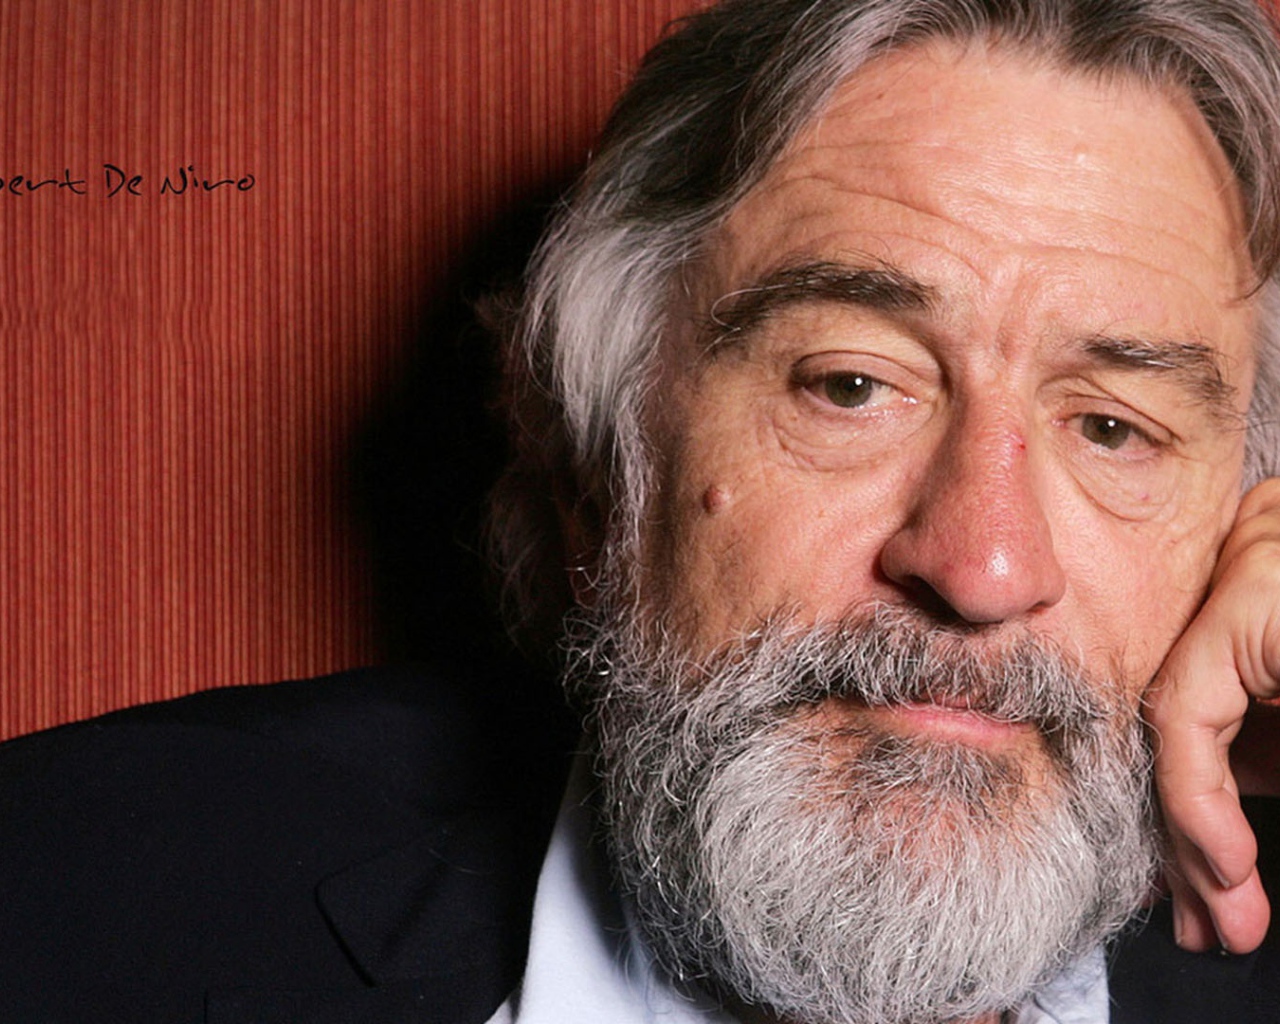 Robert De Niro with beard